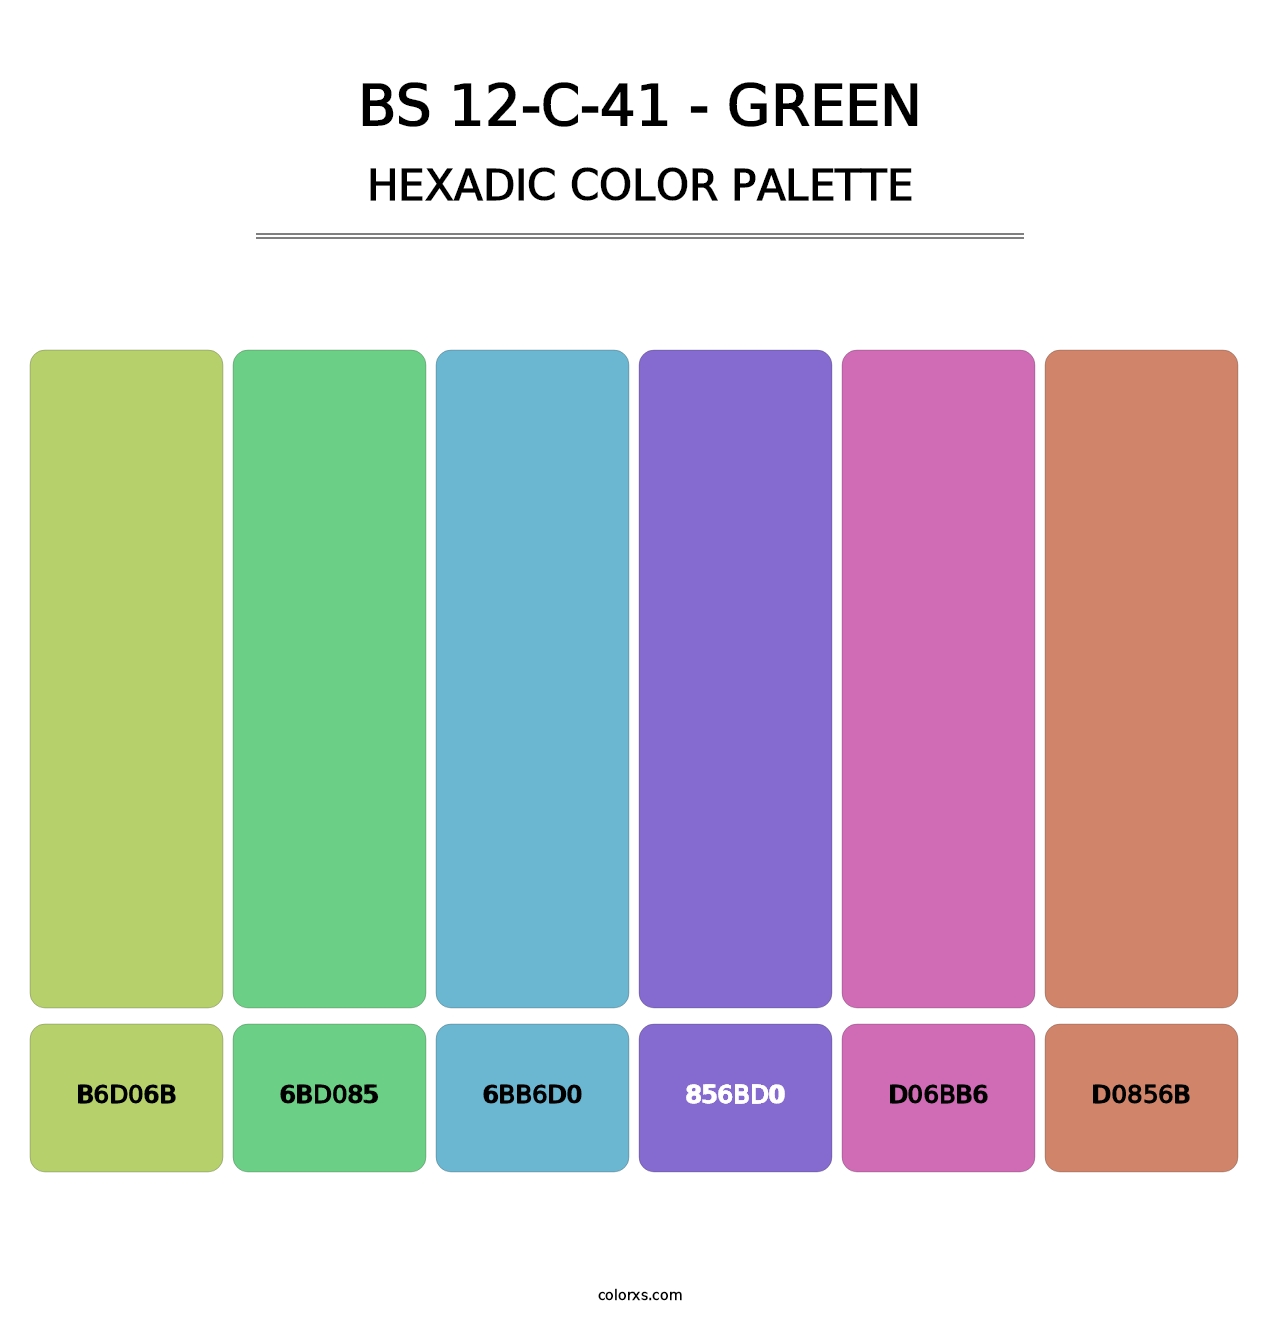 BS 12-C-41 - Green - Hexadic Color Palette